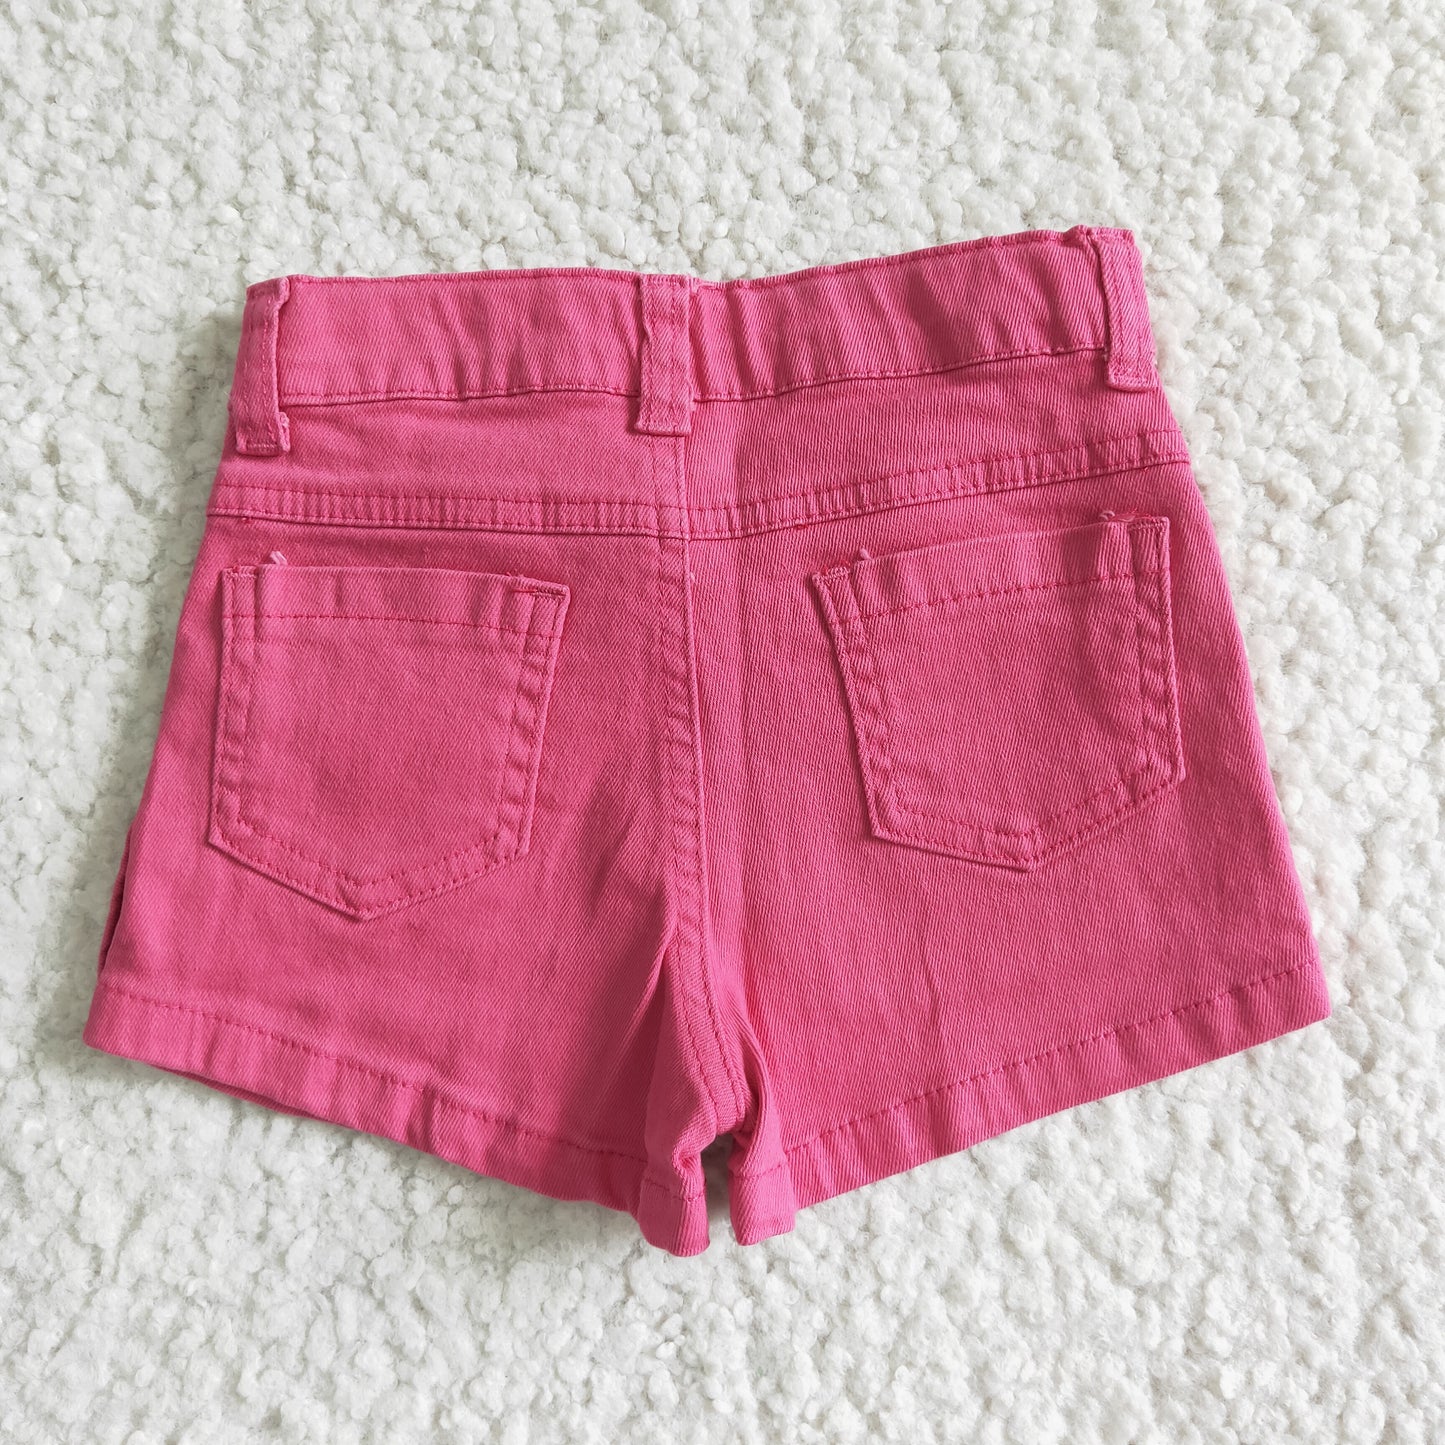 Hot pink ruffle denim pocket shorts